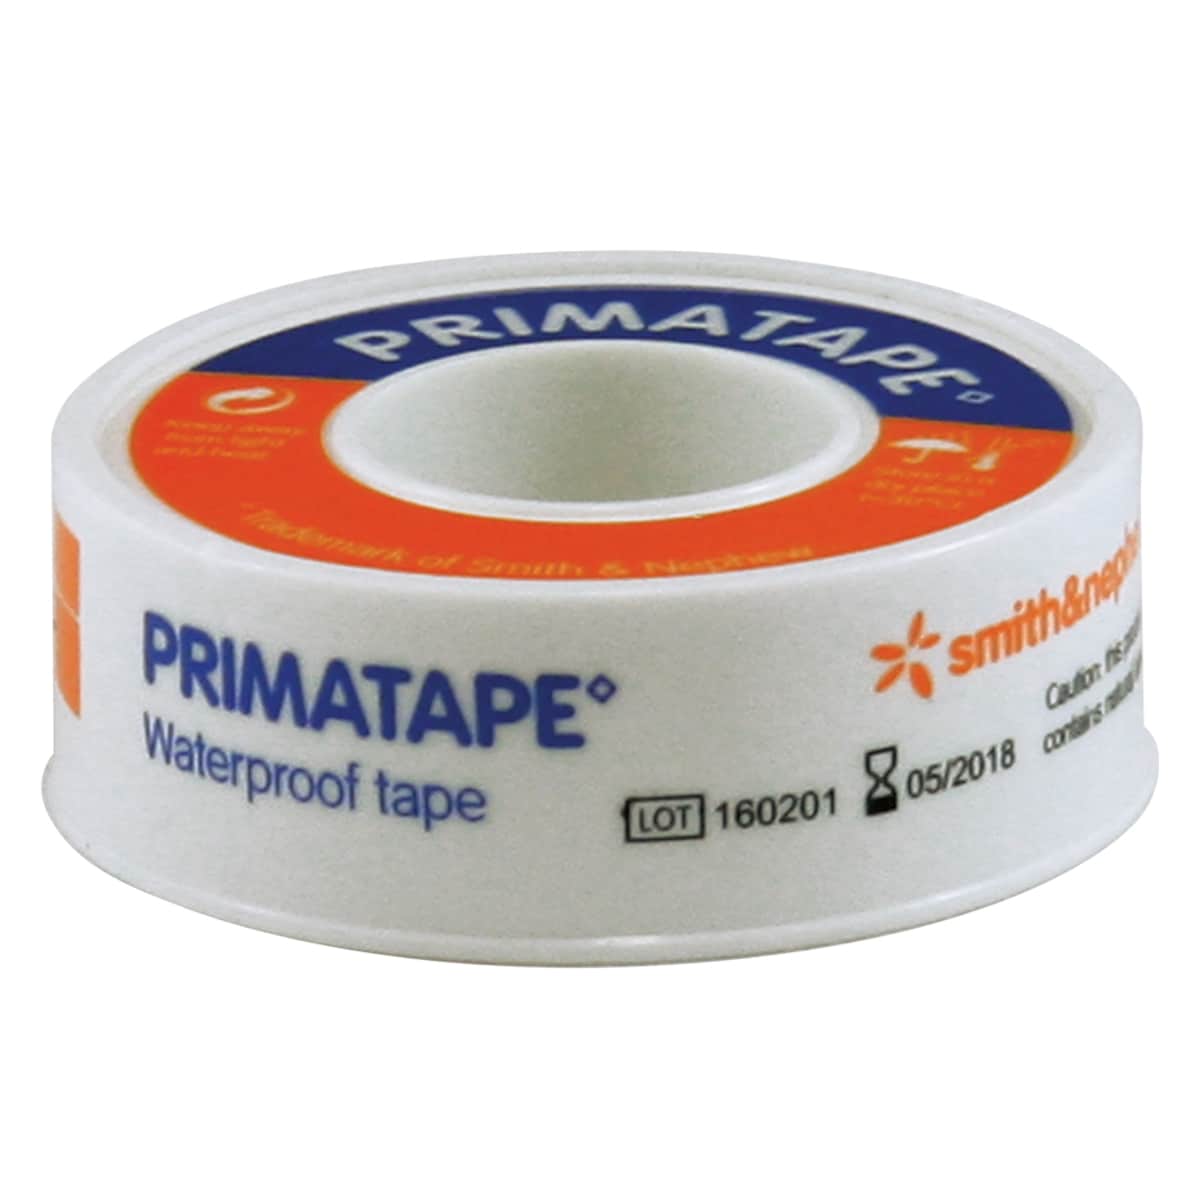 Primatape Waterproof Tape 1.25cm x 5m by Smith & Nephew